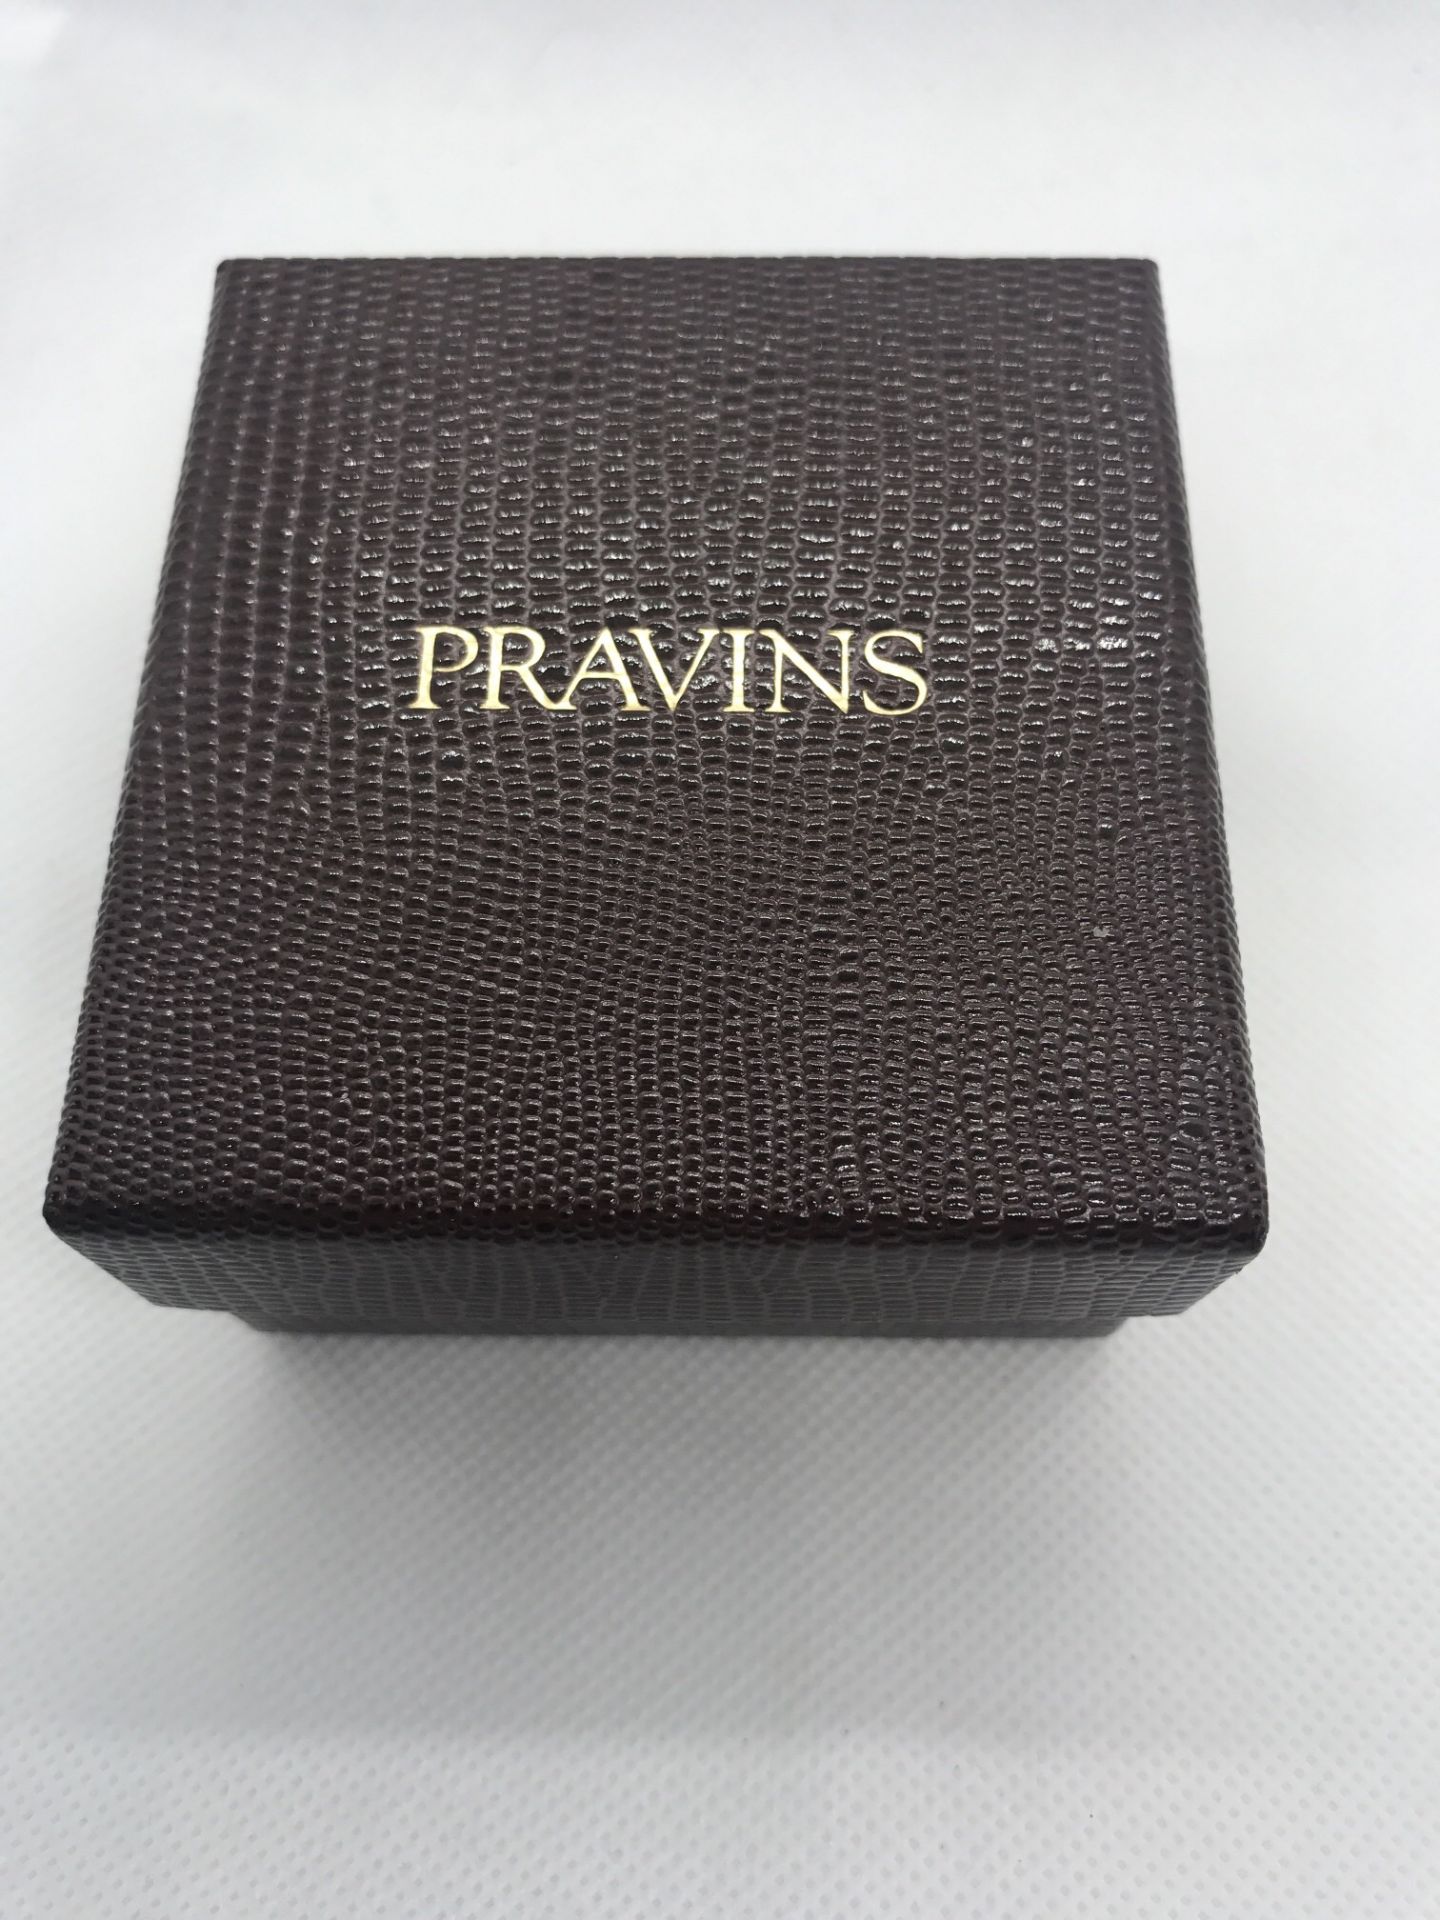 18ct WHITE GOLD DIAMOND EARRINGS IN PRAVINS BOX - Image 4 of 4